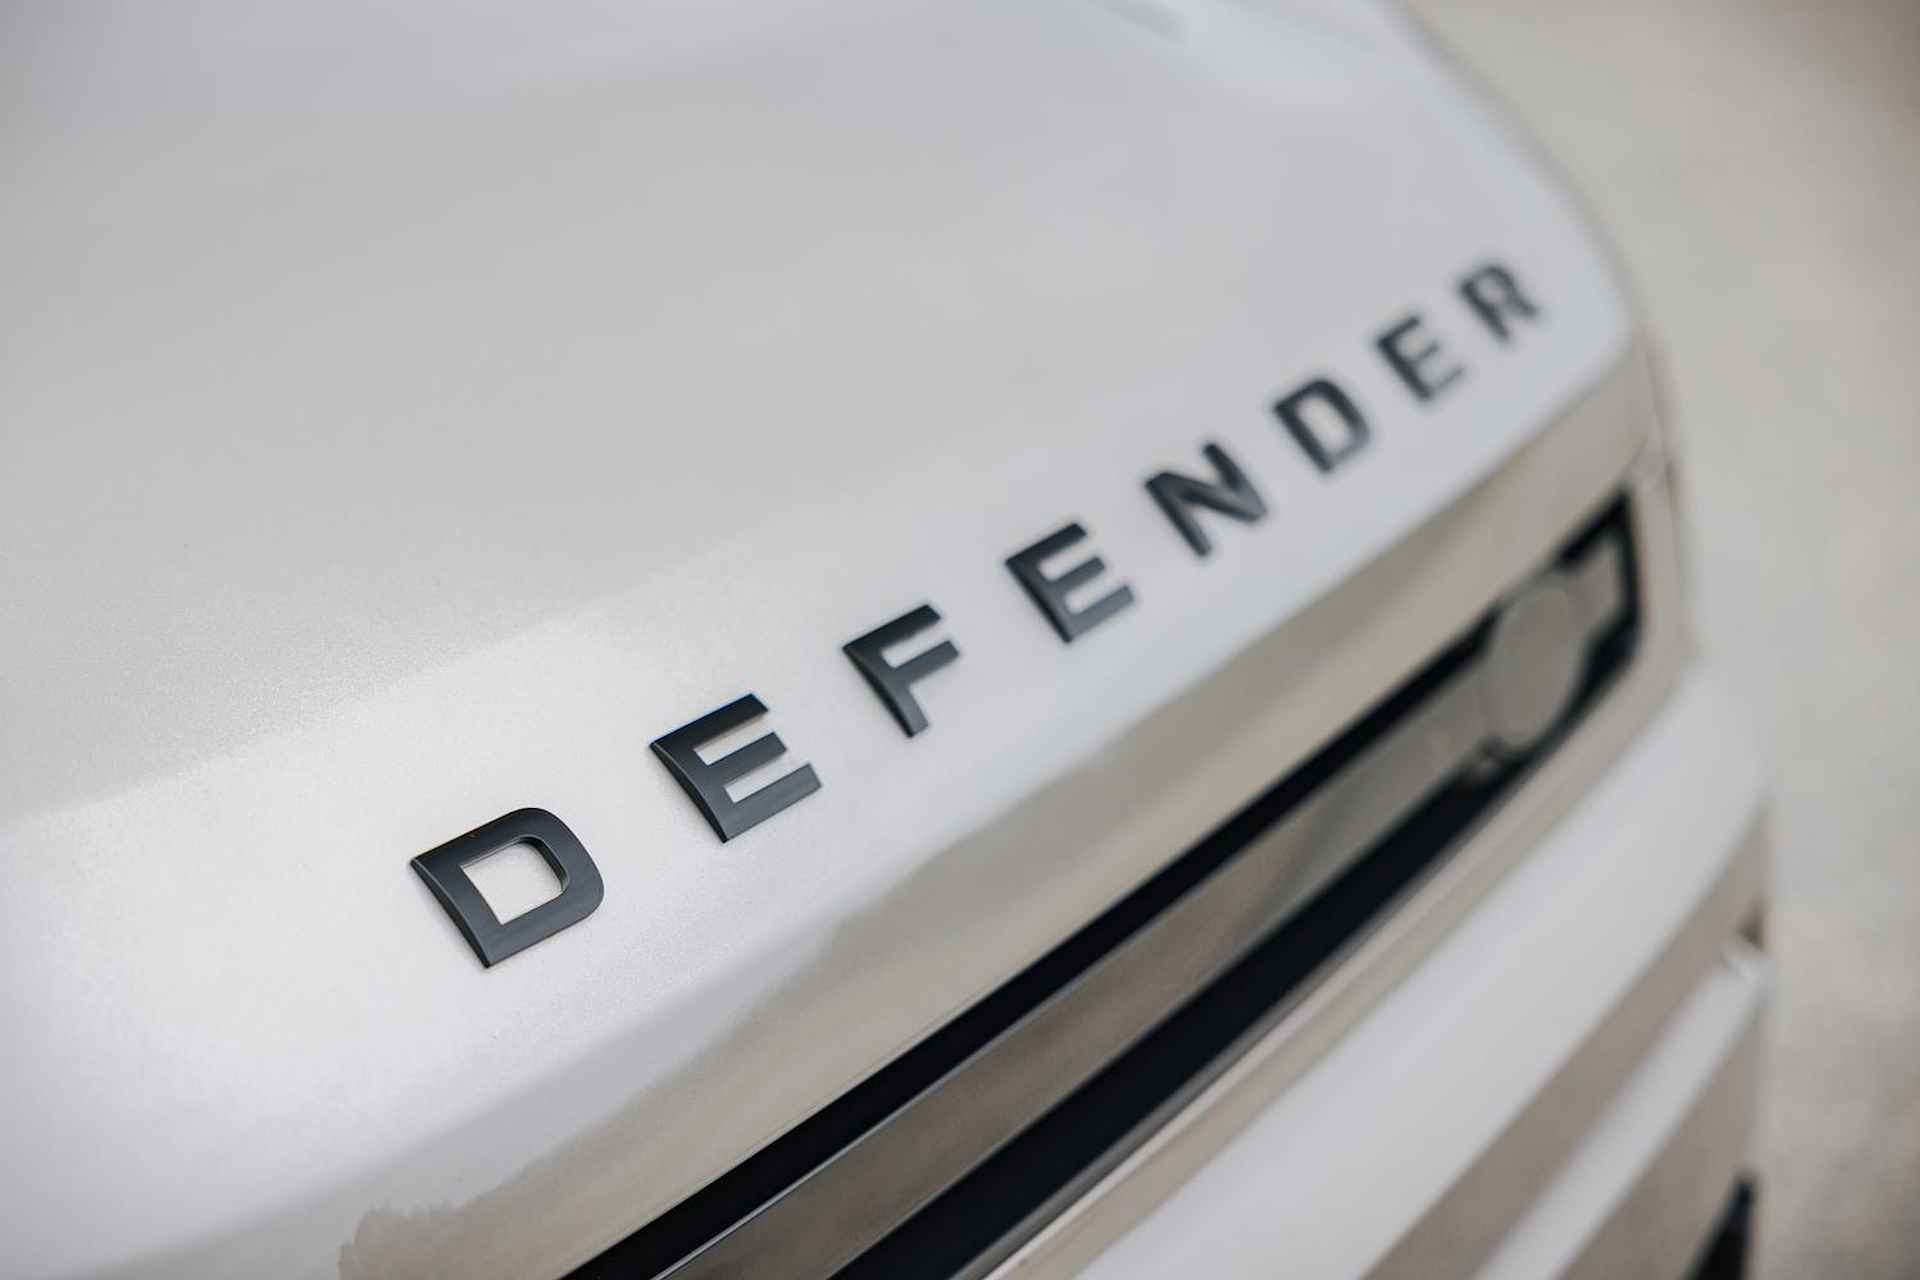 Land Rover Defender 2.0 P400e 110 X-Dynamic HSE | Panoramadak | 22" Velgen in Gloss Black | 11,4" Touch Screen | Cold Climate Pack | Elektrische Trekhaak | Expedition imperiaal | Uitklapbare Dakladder| All Season Banden - 36/43